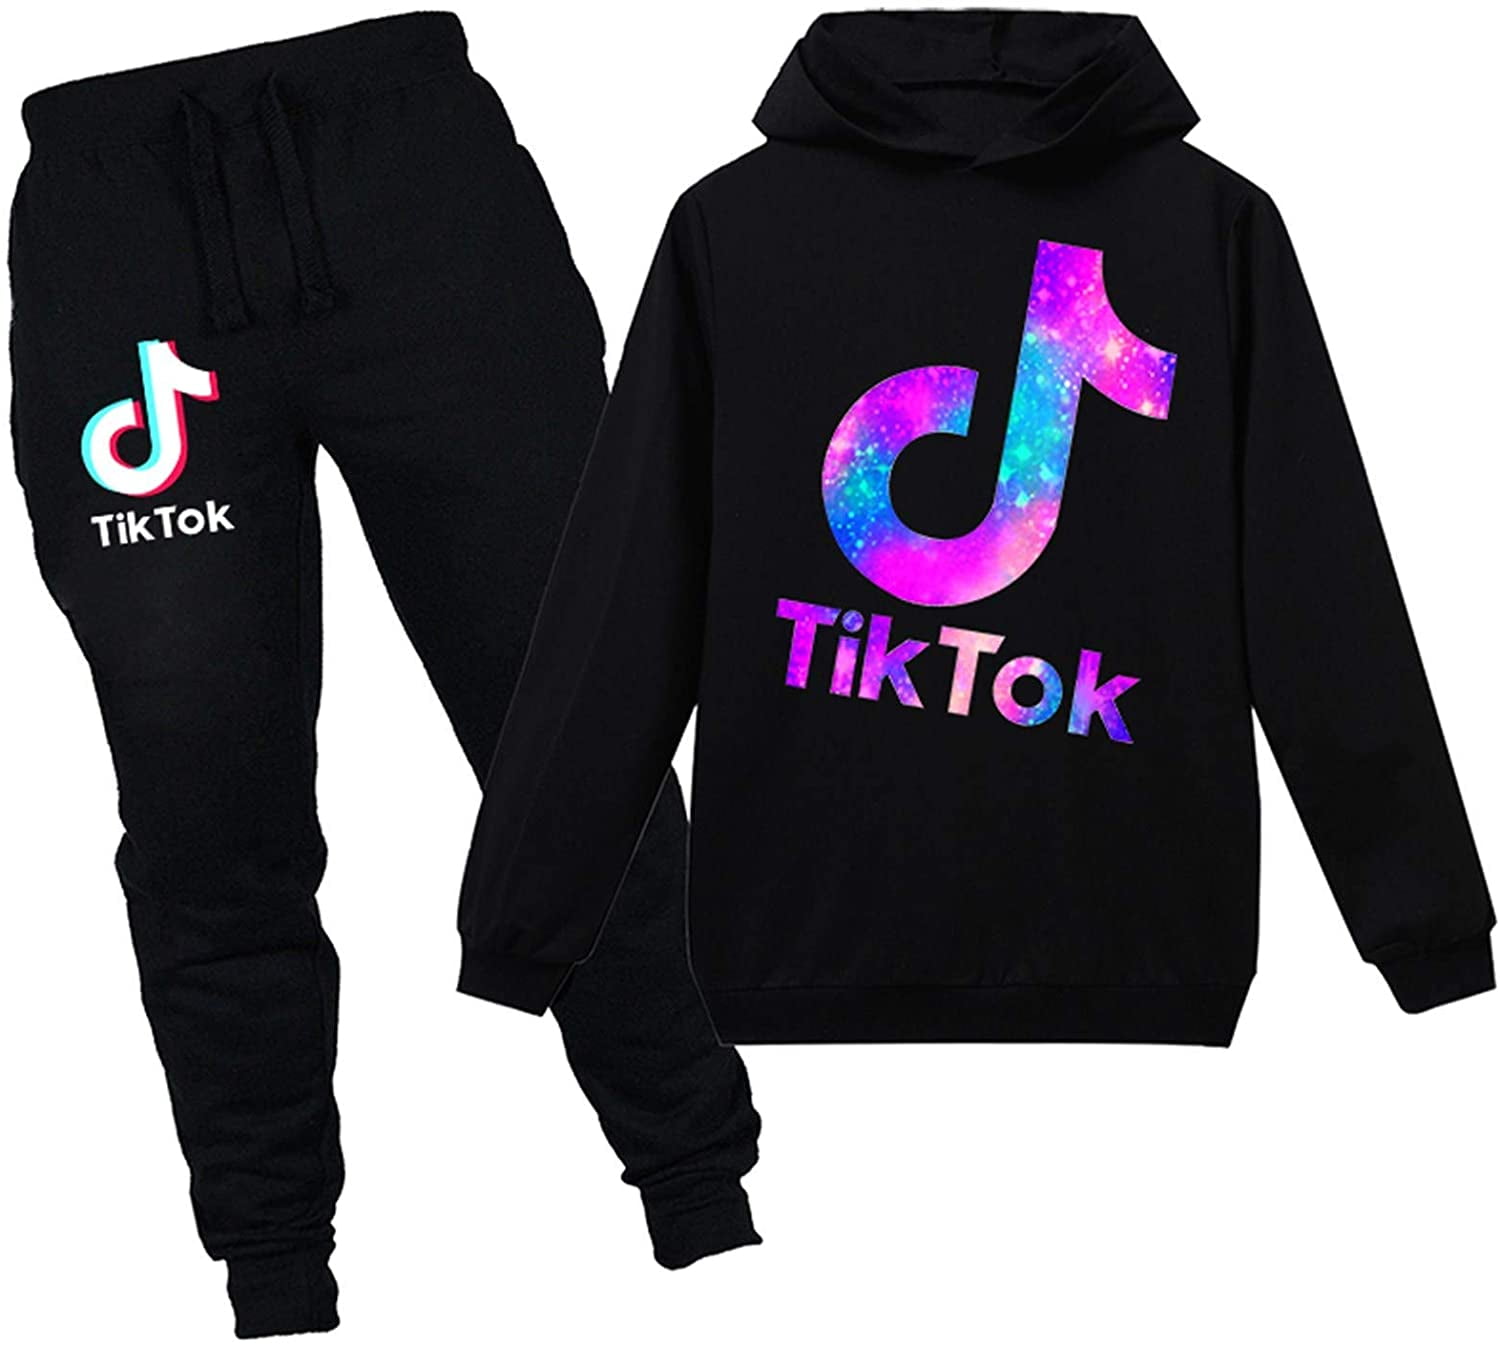 Boys Girls TIK TOK Kids Hoodies Pullover Sweatshirt Clothing Sets Birthday Gifts 